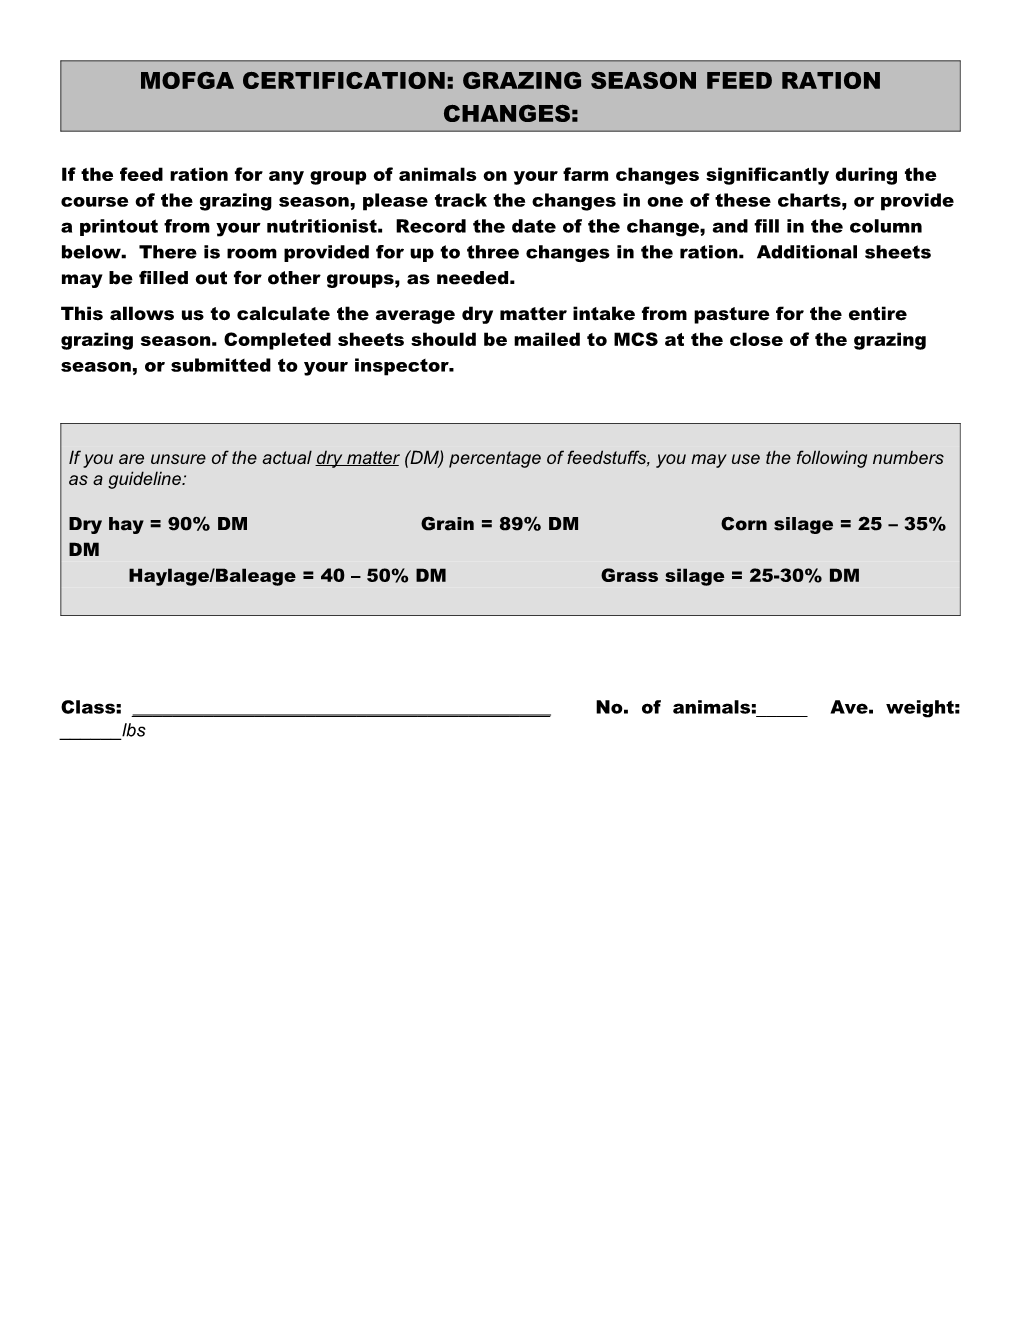 Mofga Certification: Grazing Season Feed Ration Changes